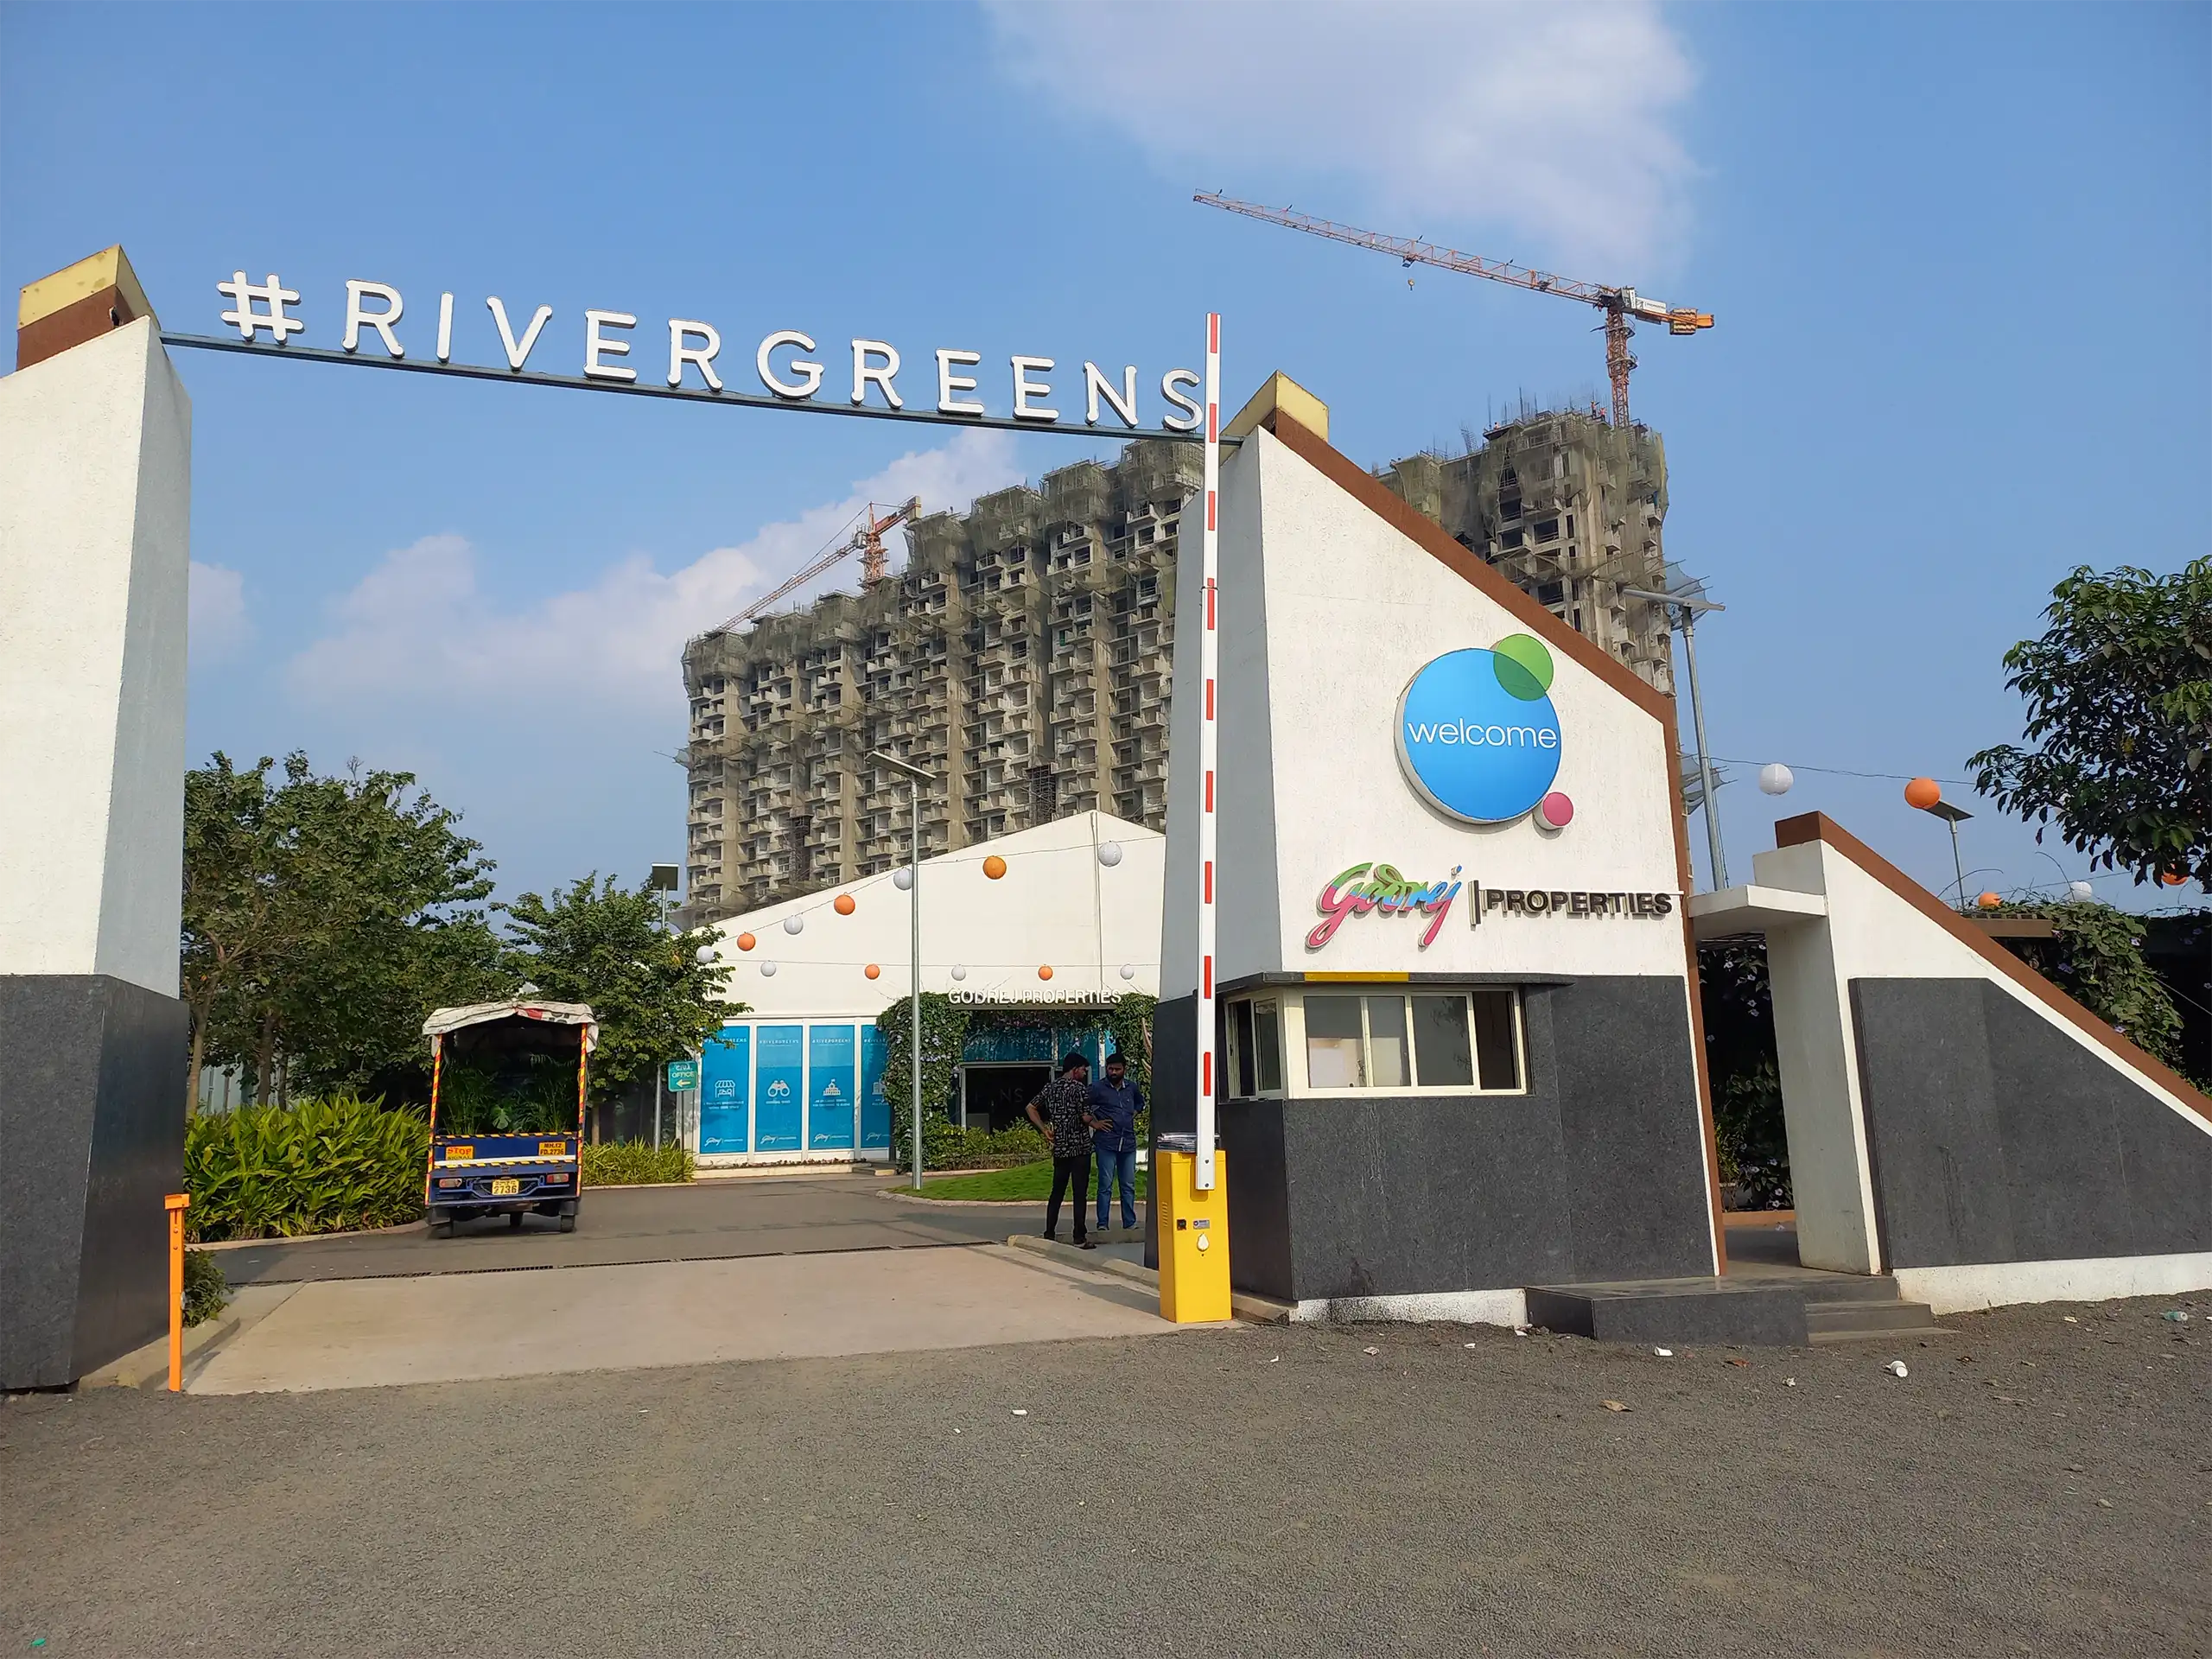 Godrej Properties #Rivergreens at Kharadi